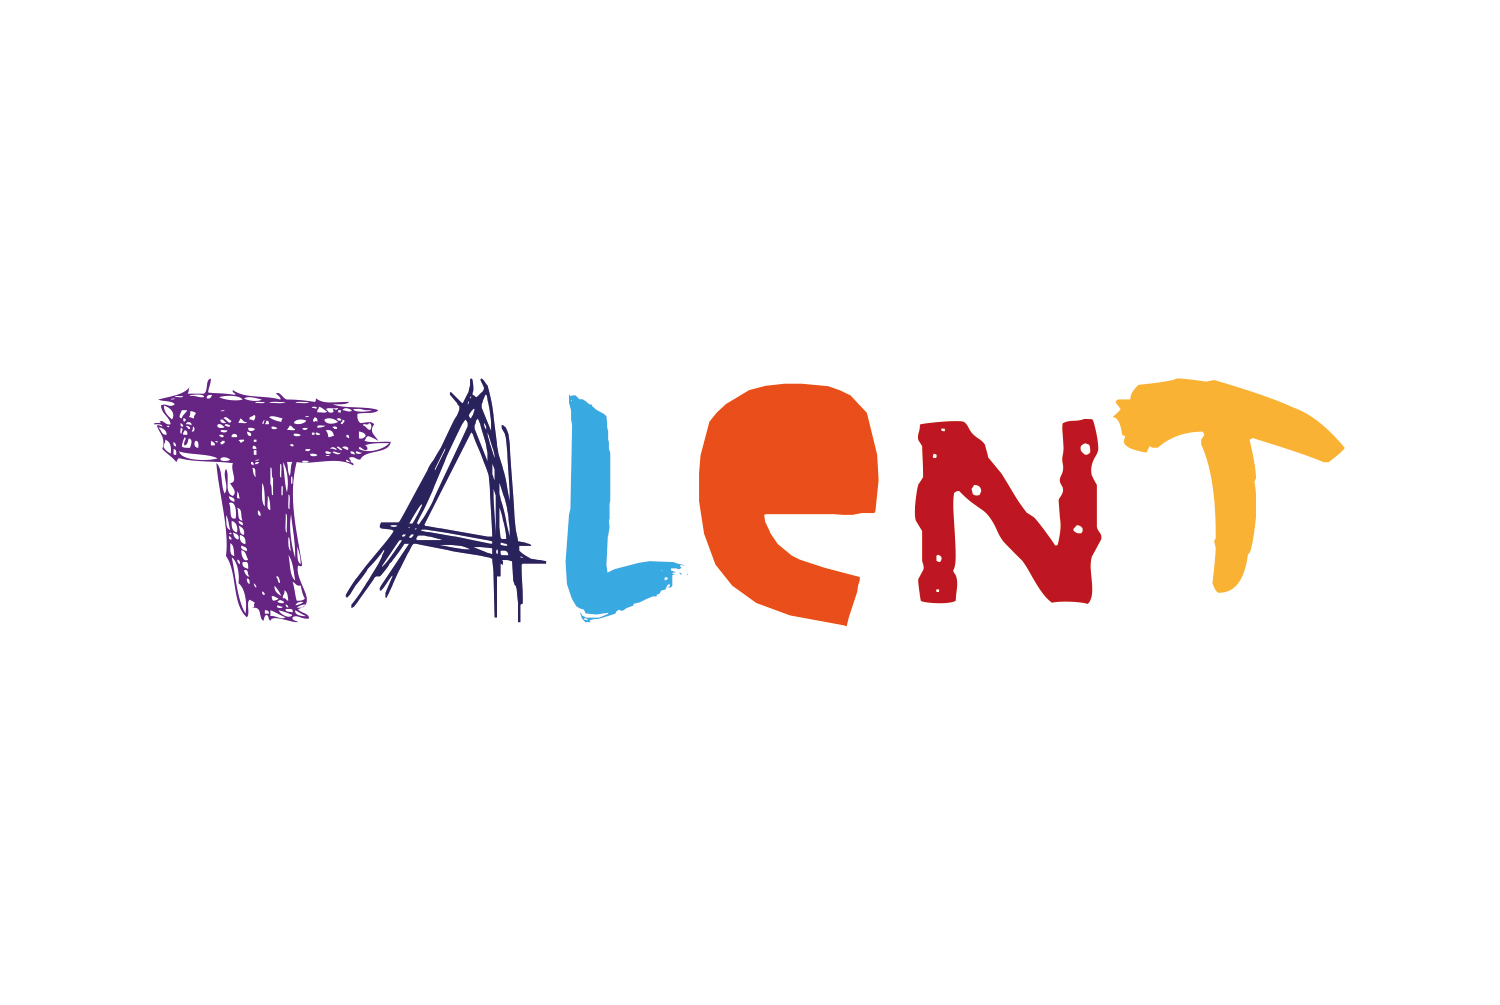 logo talent